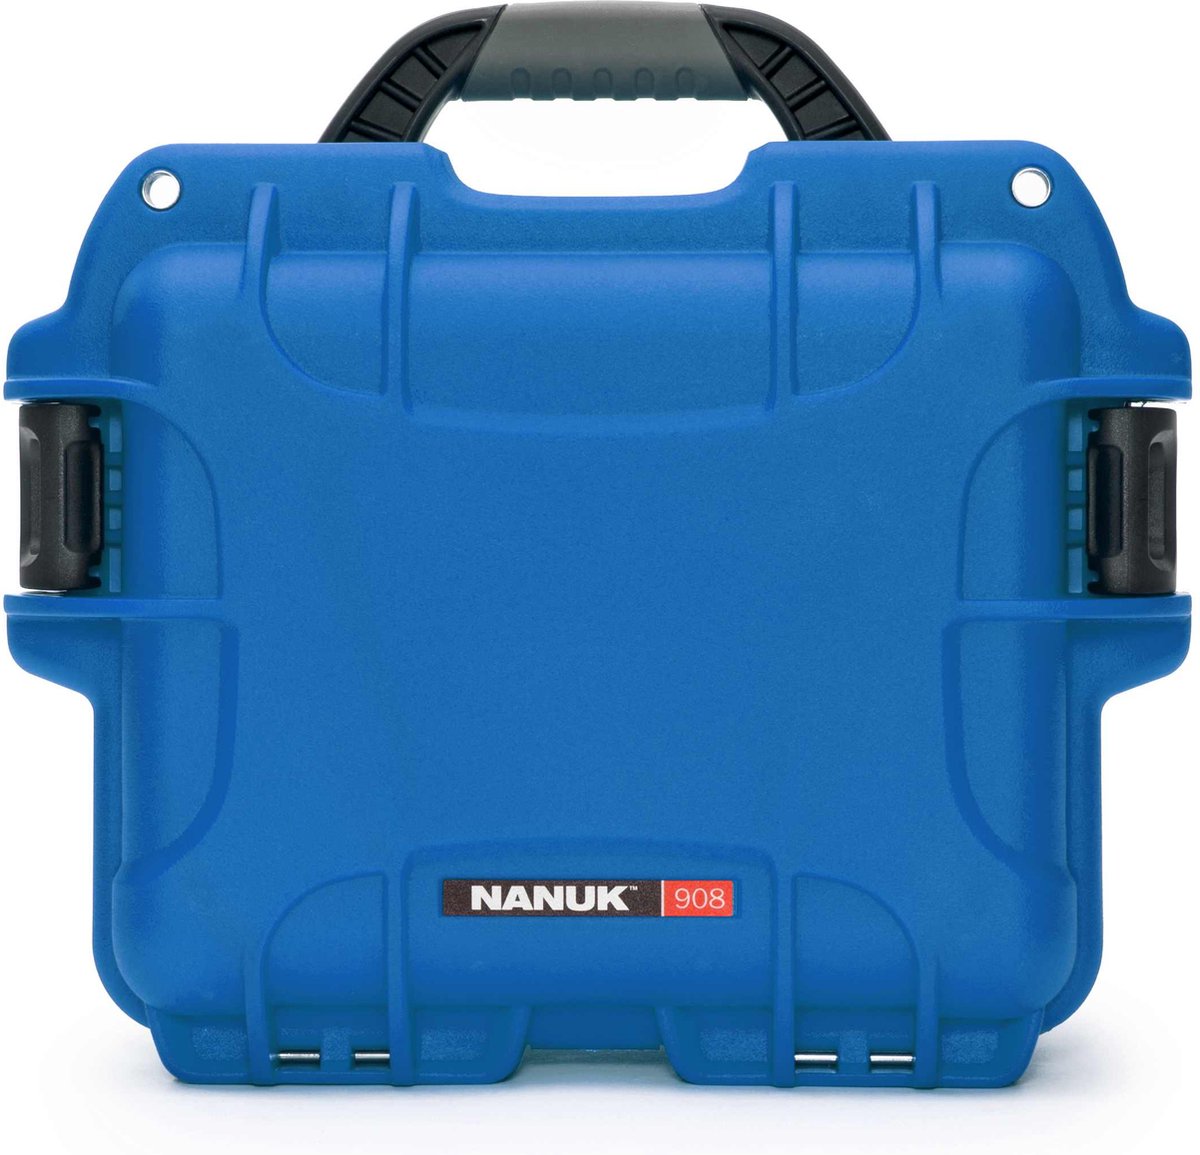 Nanuk 908 Case - Blue